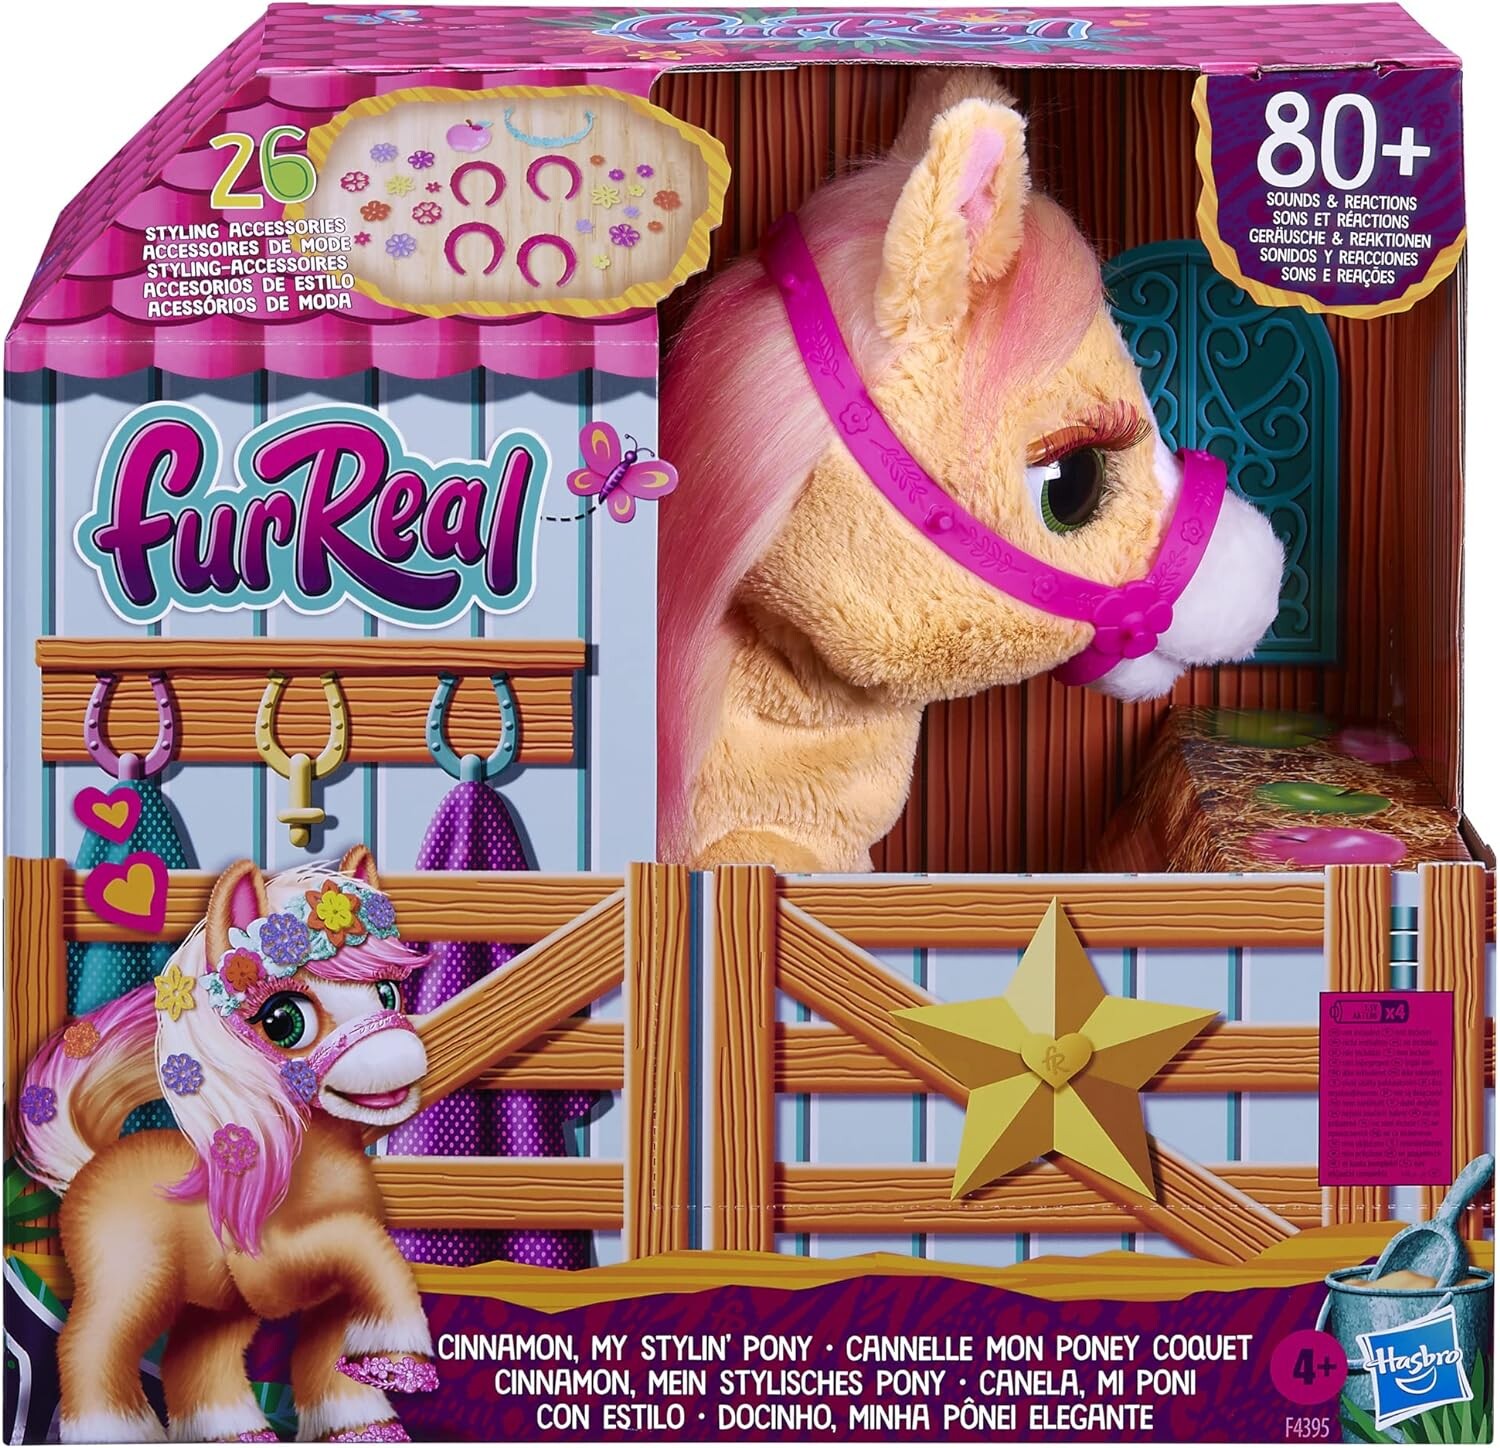 Peluche interactive 35cm Cannelle mon poney coquet - Furreal friends Hasbro  : King Jouet, Peluches interactives Hasbro - Peluches